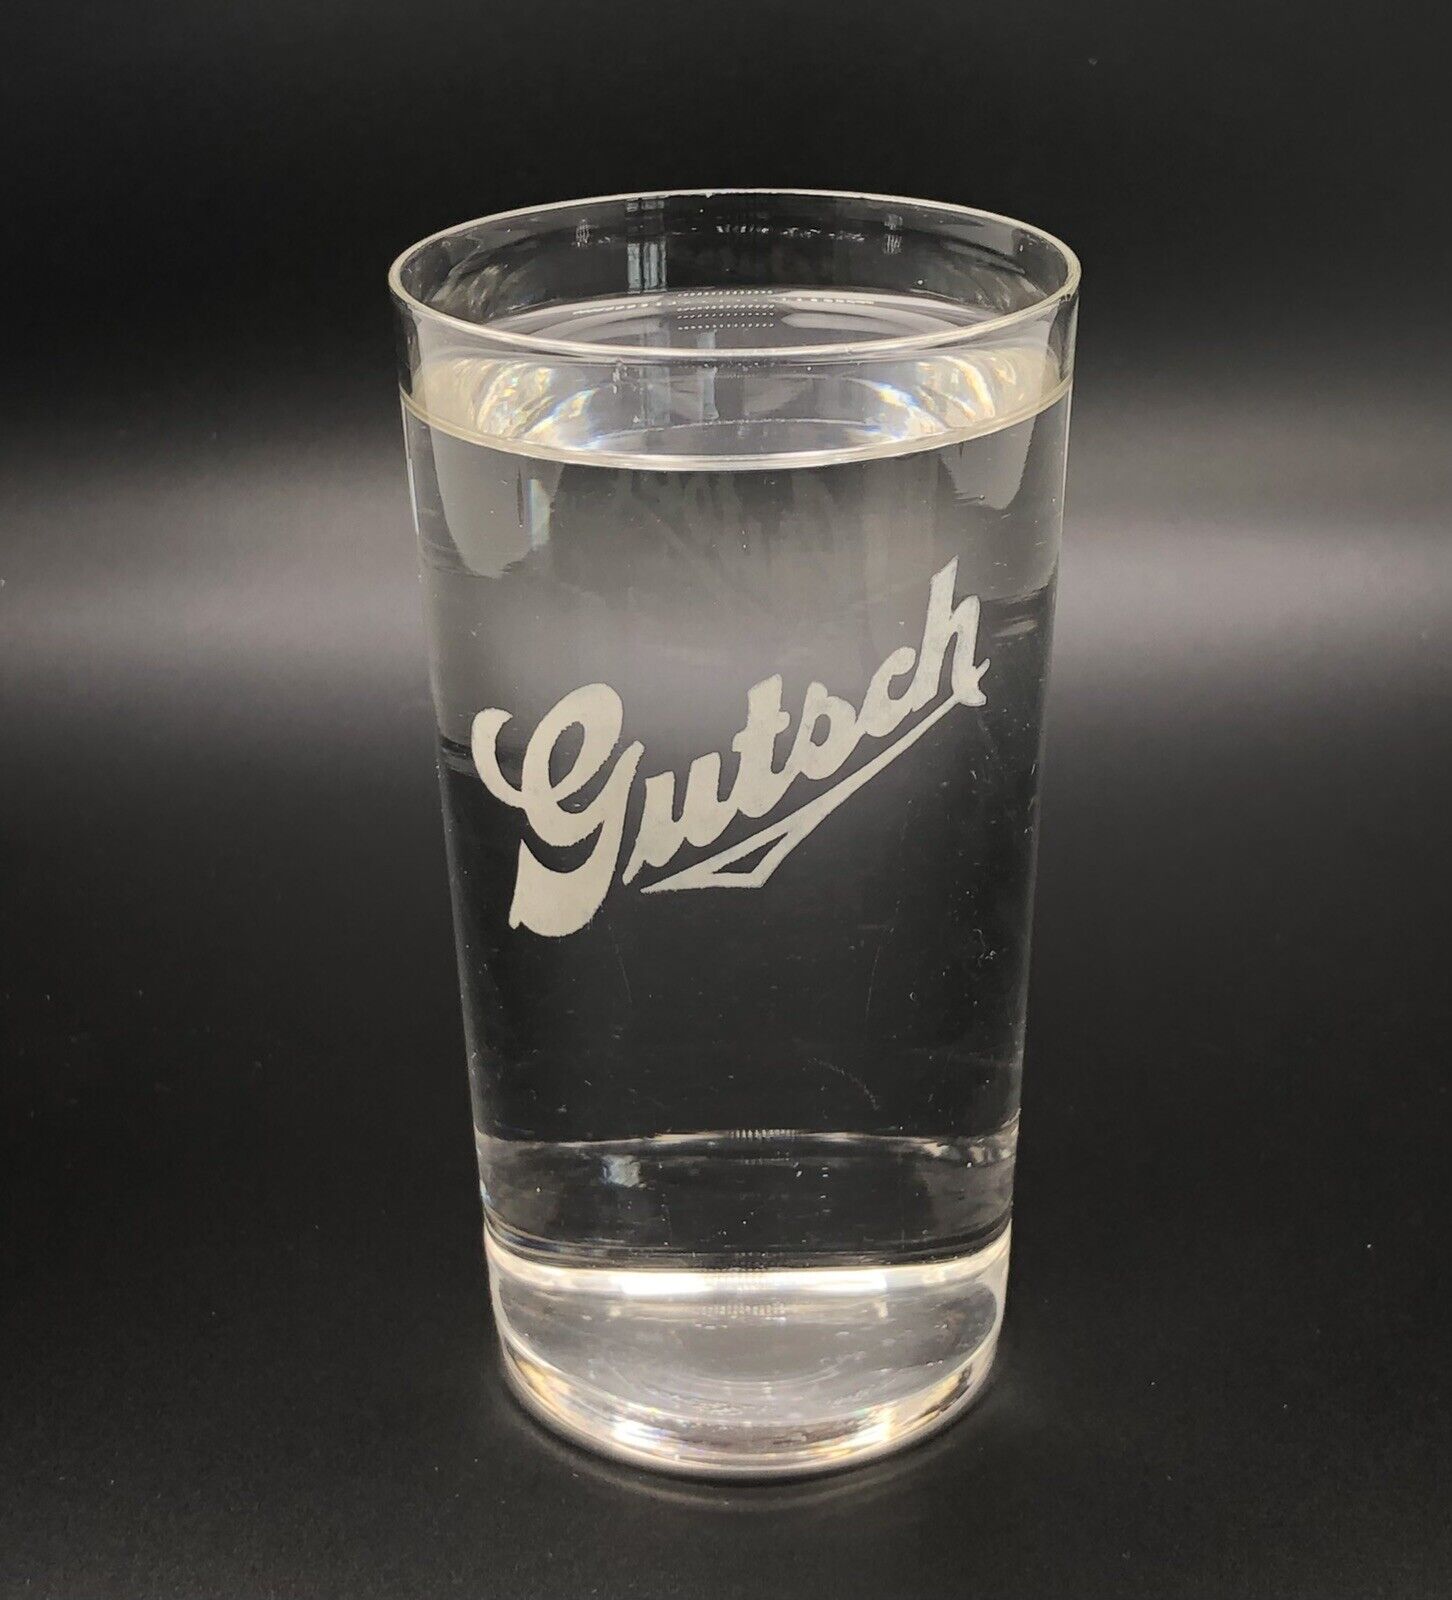 Gutsch Beer Shell Glass / Vtg Pre Prohibition Acid Etched Tavern Advertising